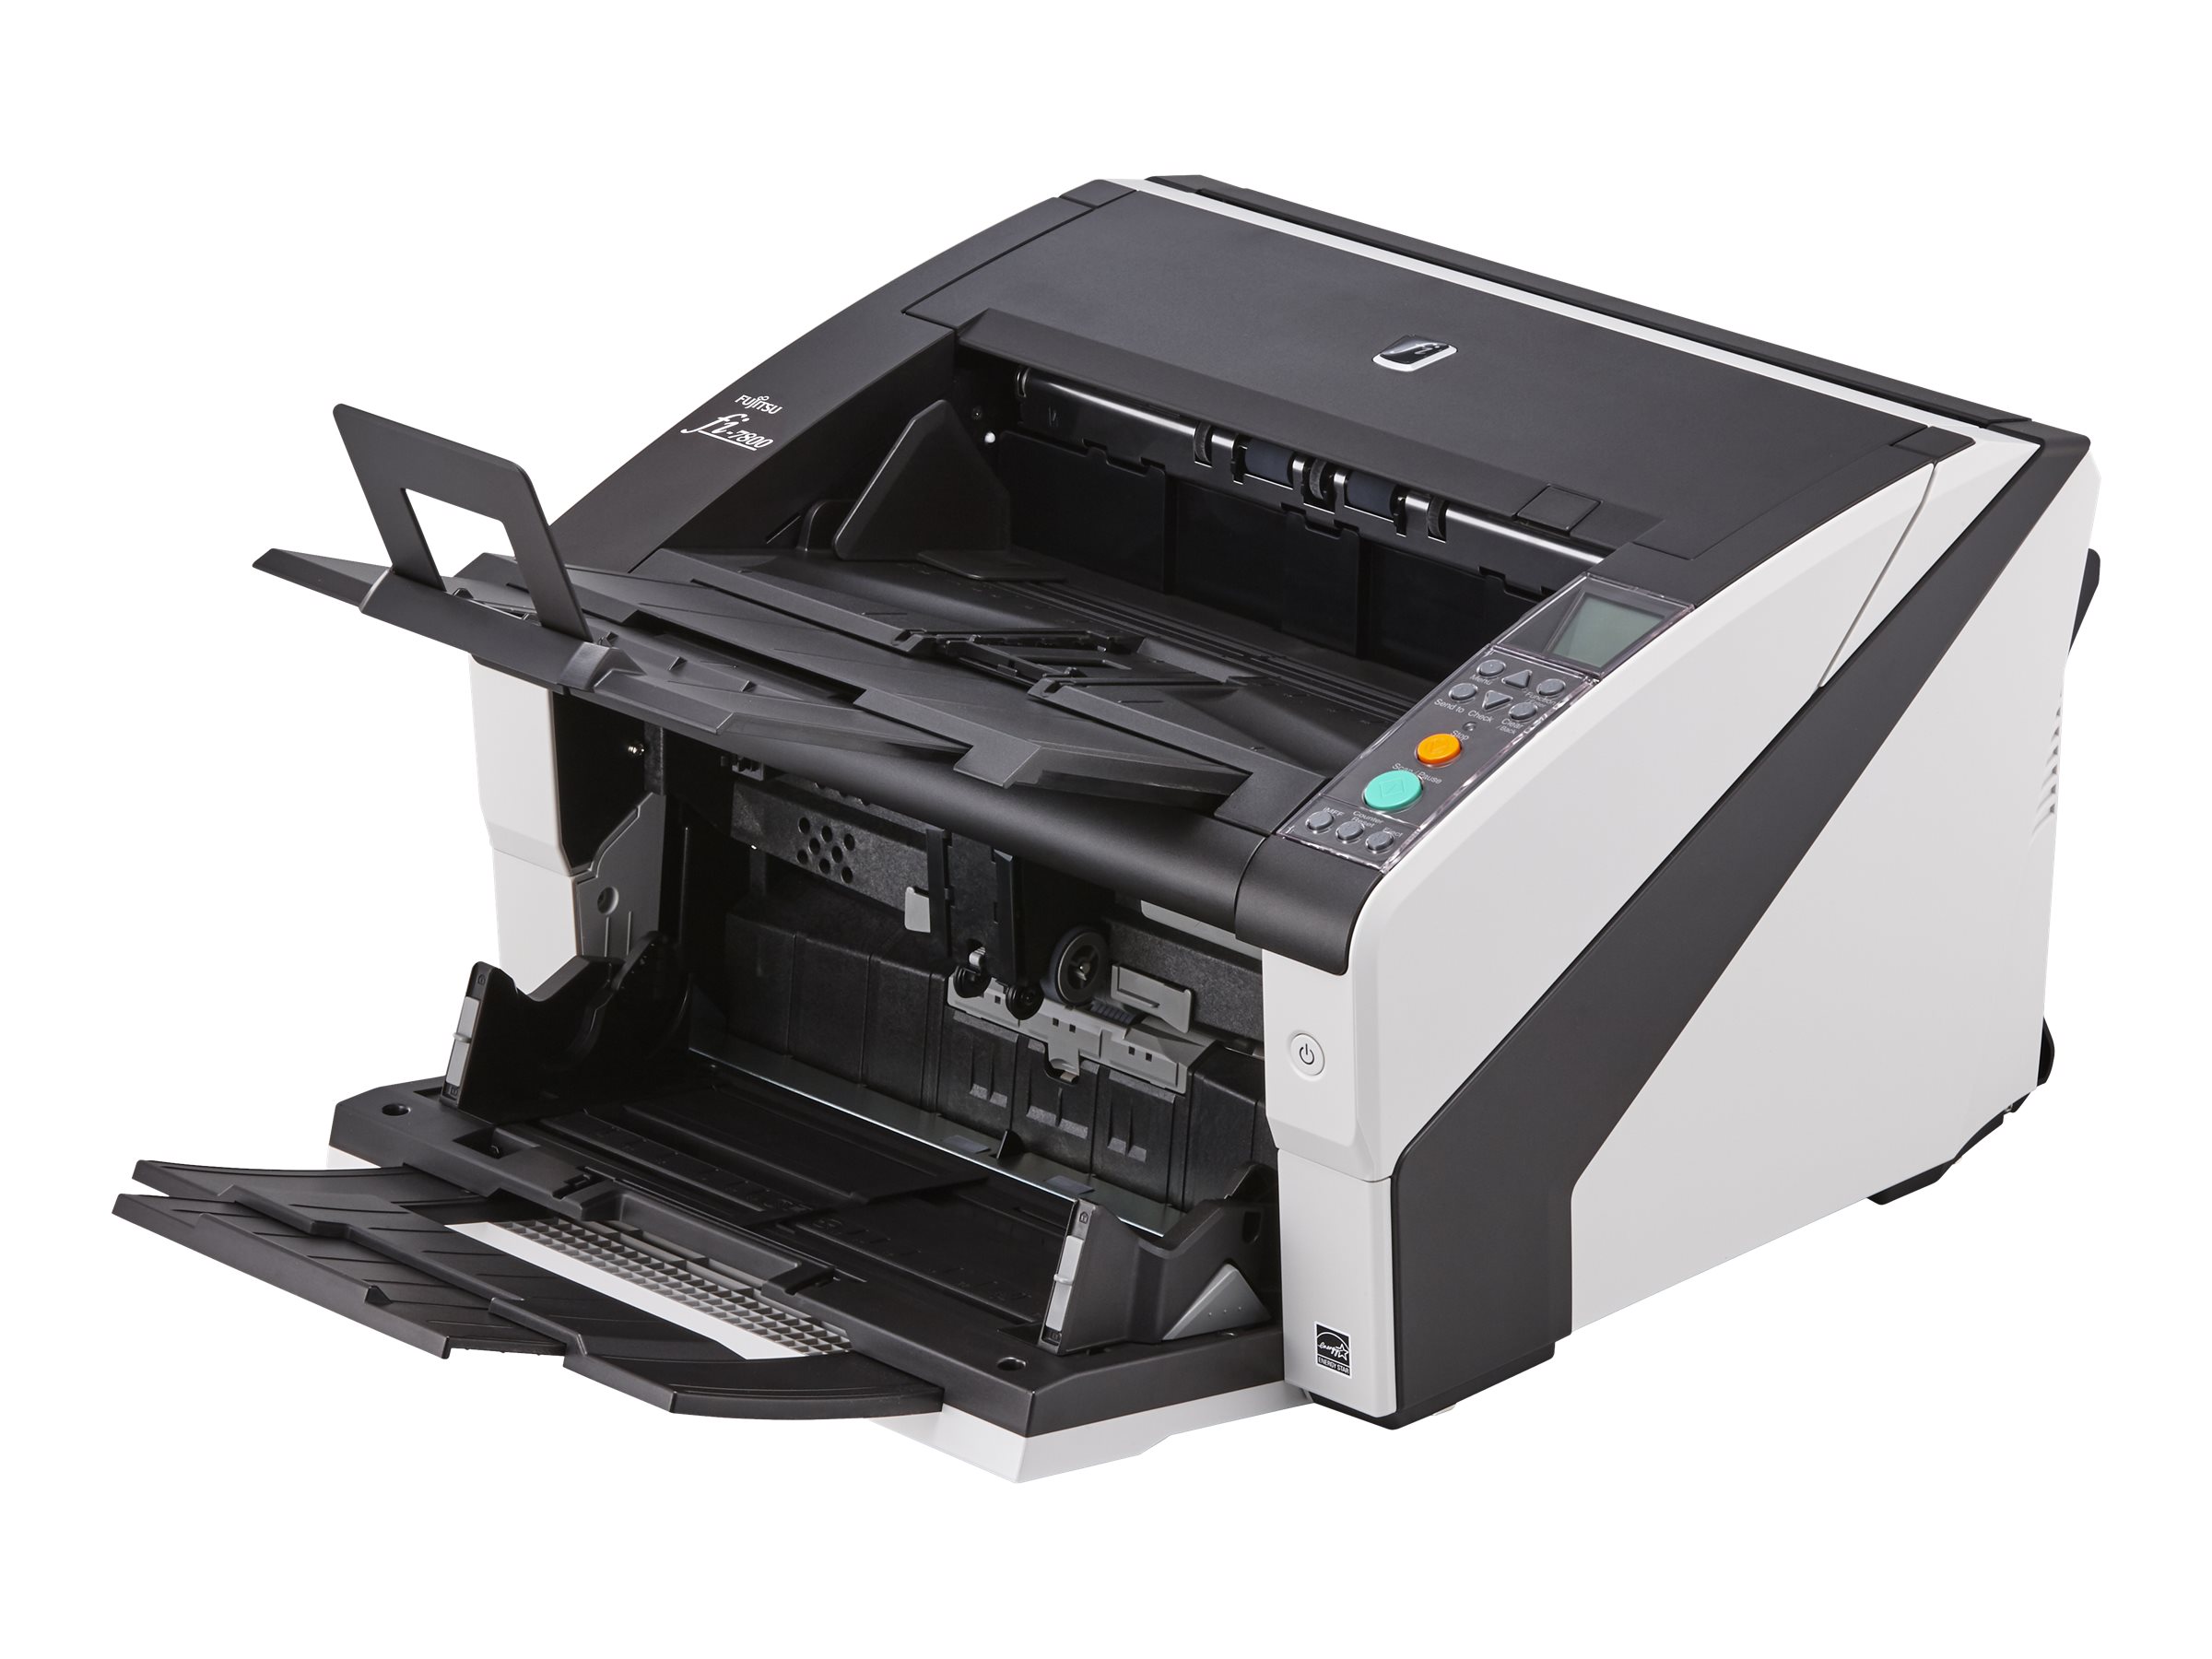 Fujitsu fi-7800 - Document scanner